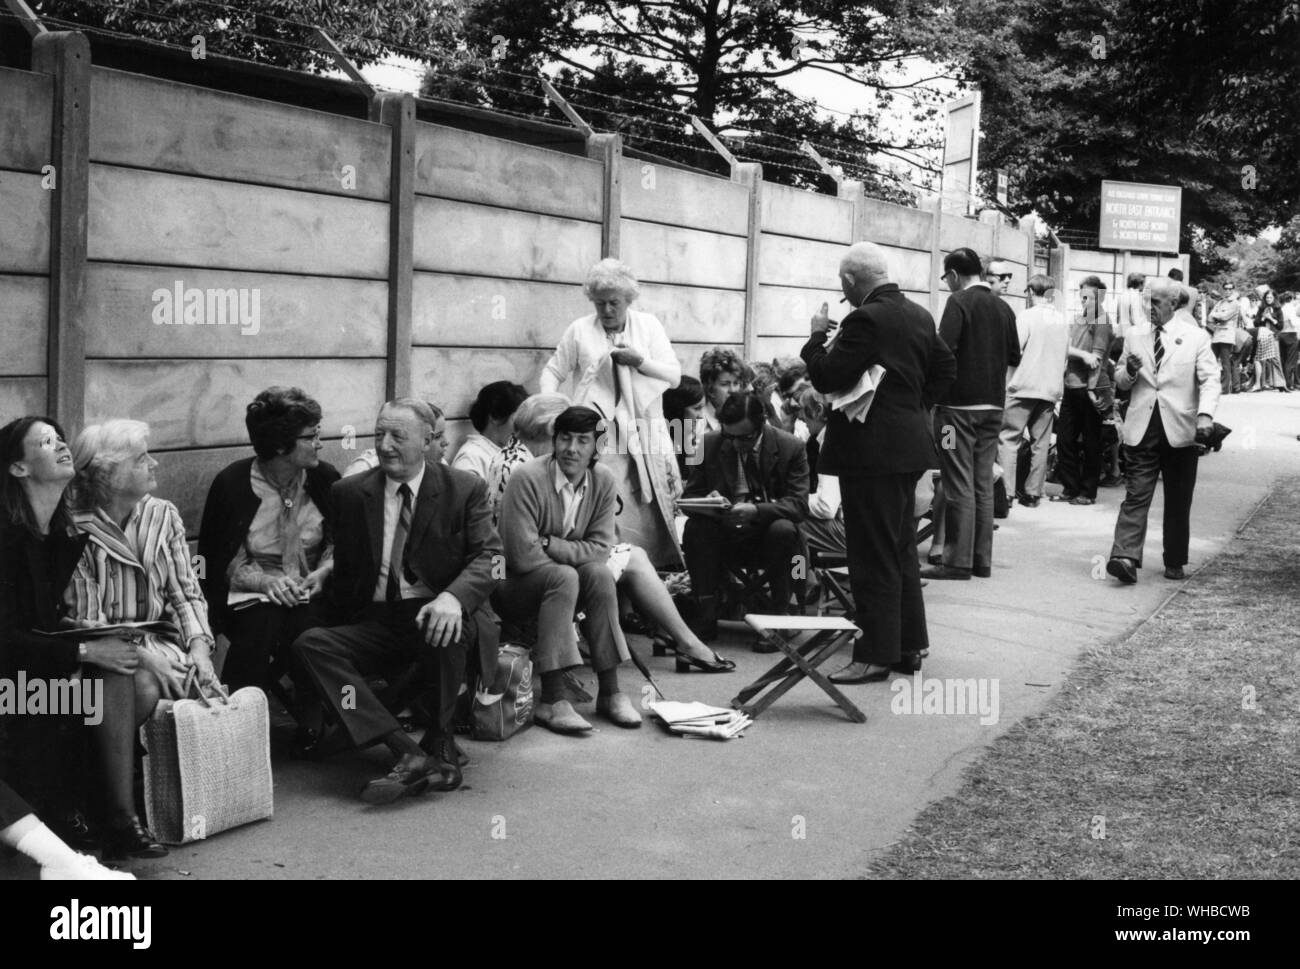 Wimbledon 1971 - folla in attesa. Foto Stock